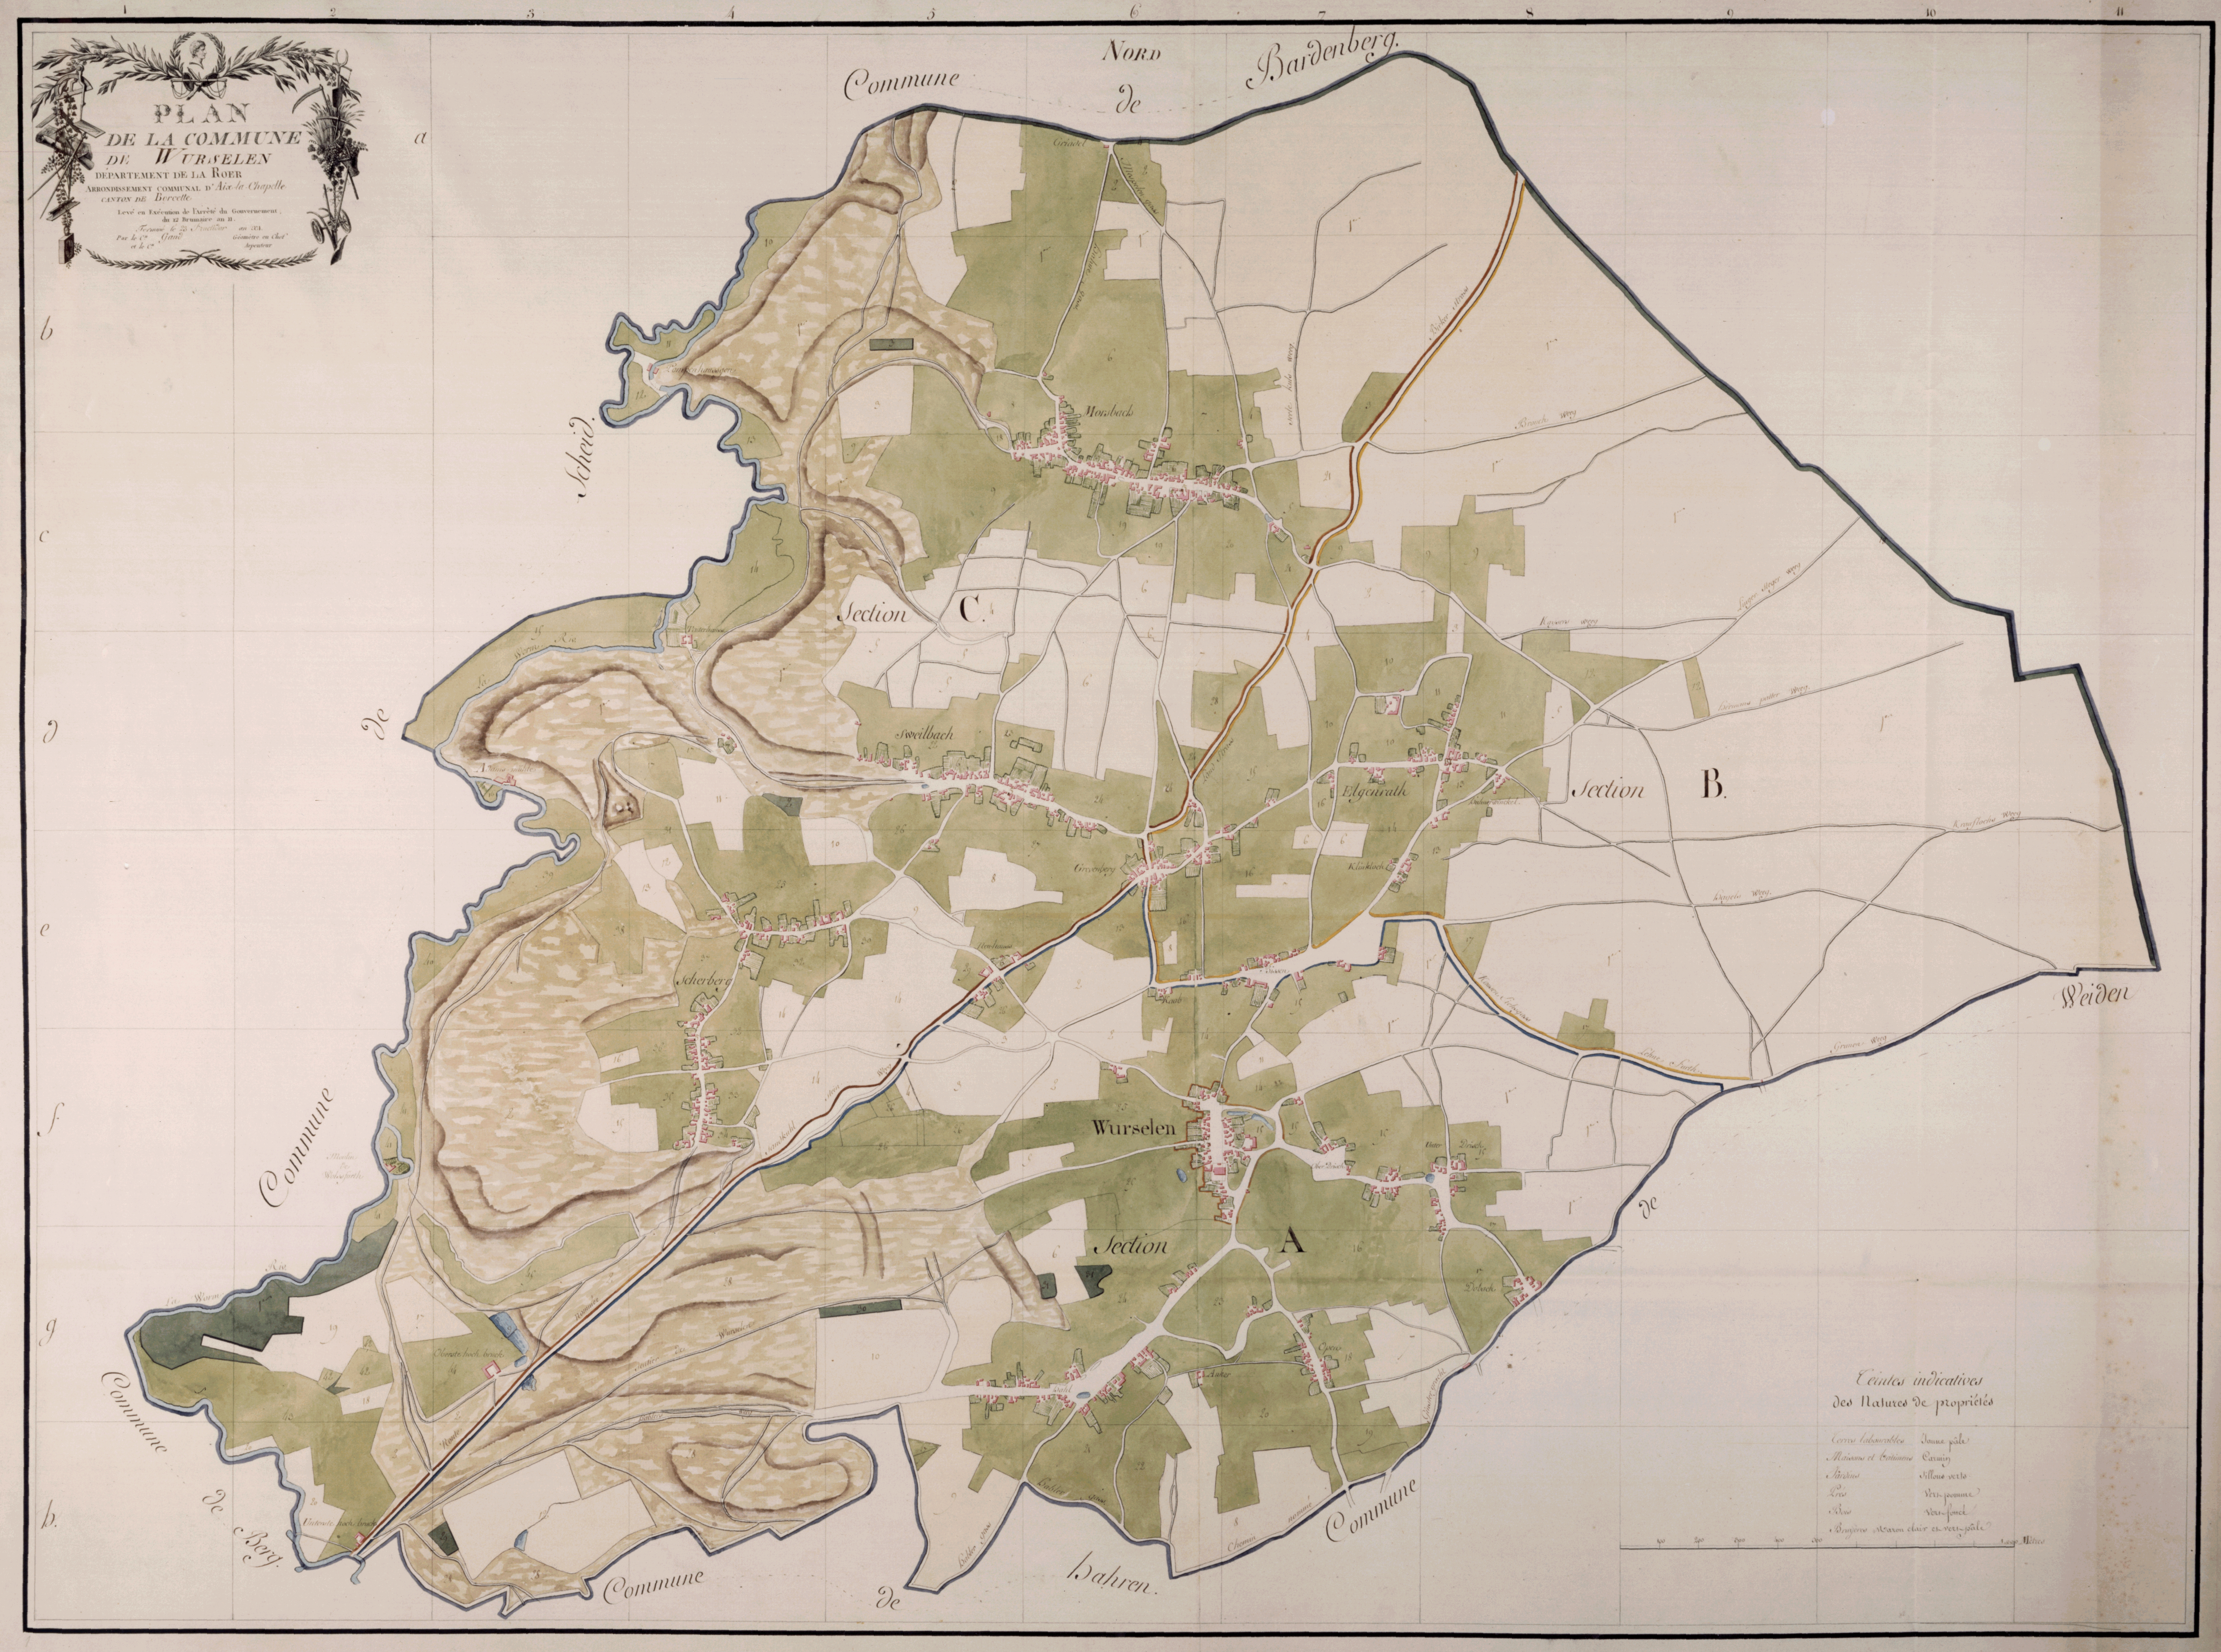 Plan de Commune Wuerselen 1803